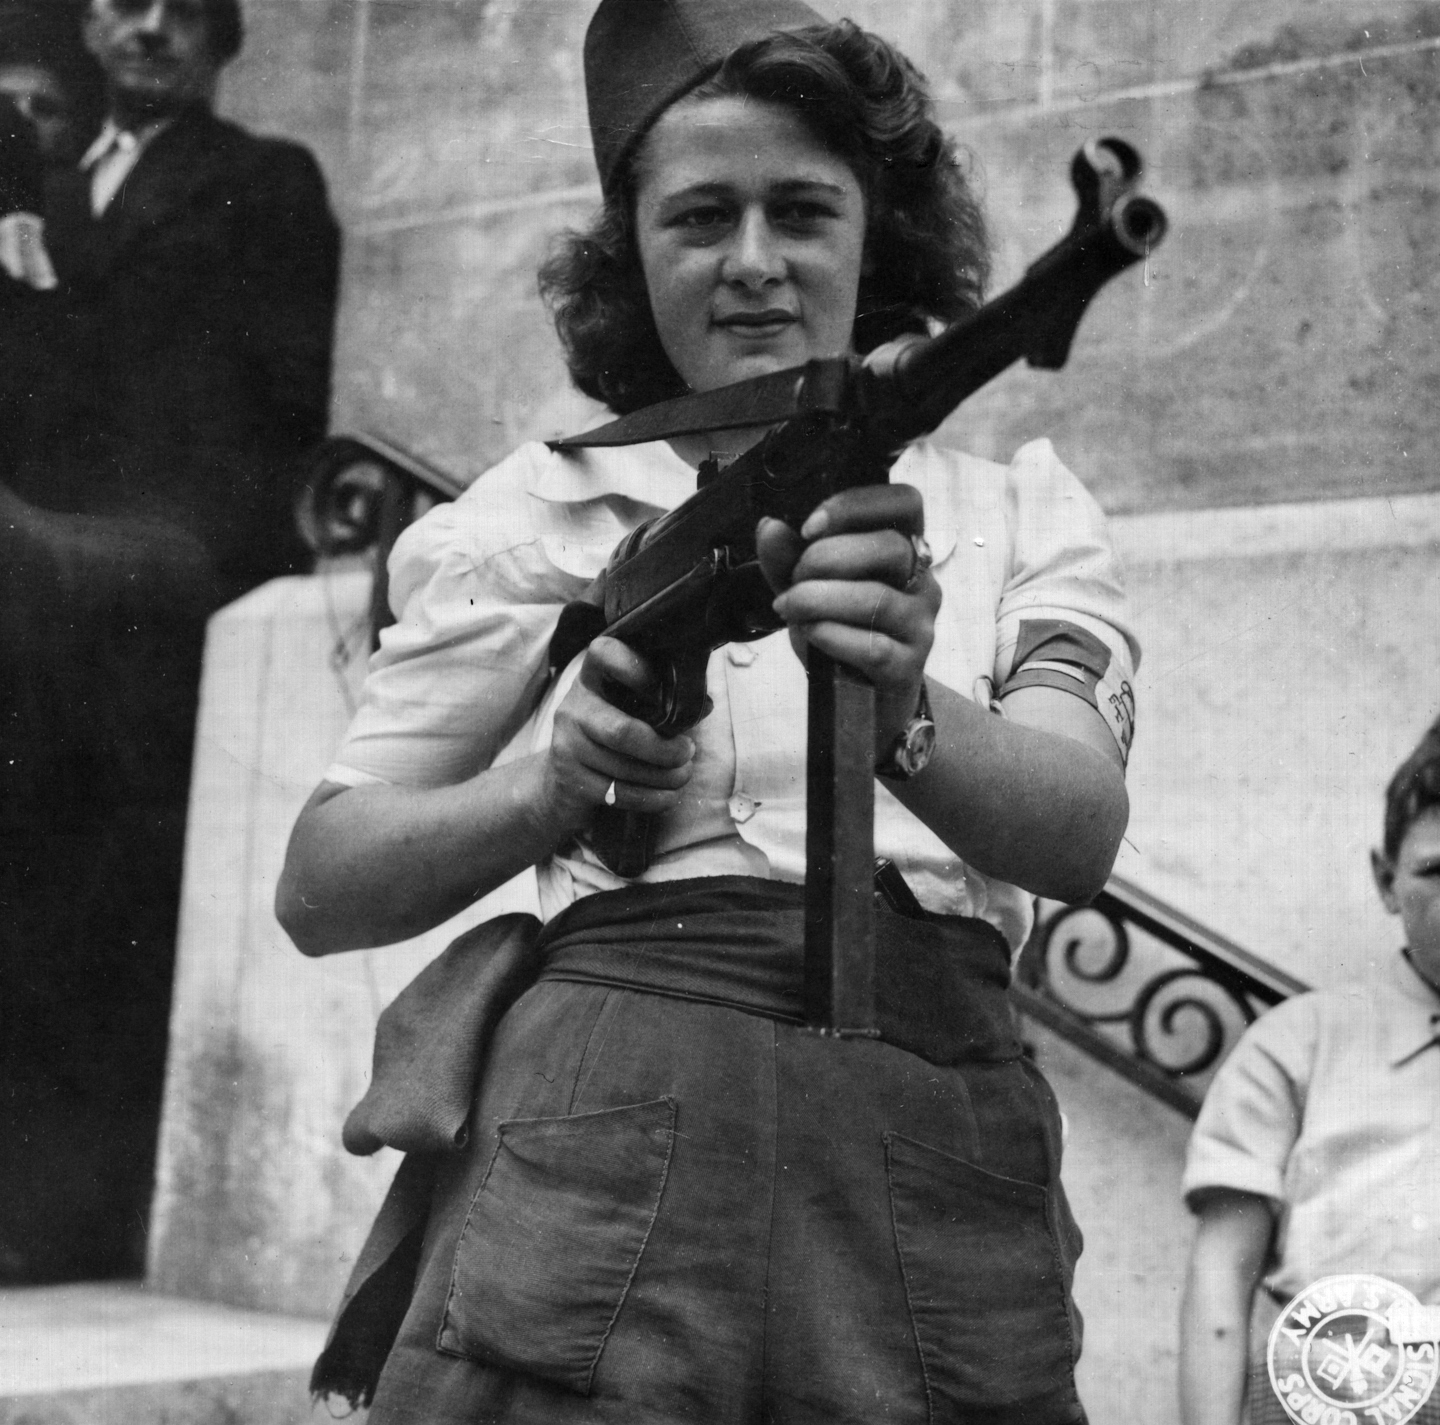 Simone Segouin (nom de guerre Nicole Minet) posing with a MP 40 submachine gun, 23 Aug 1944